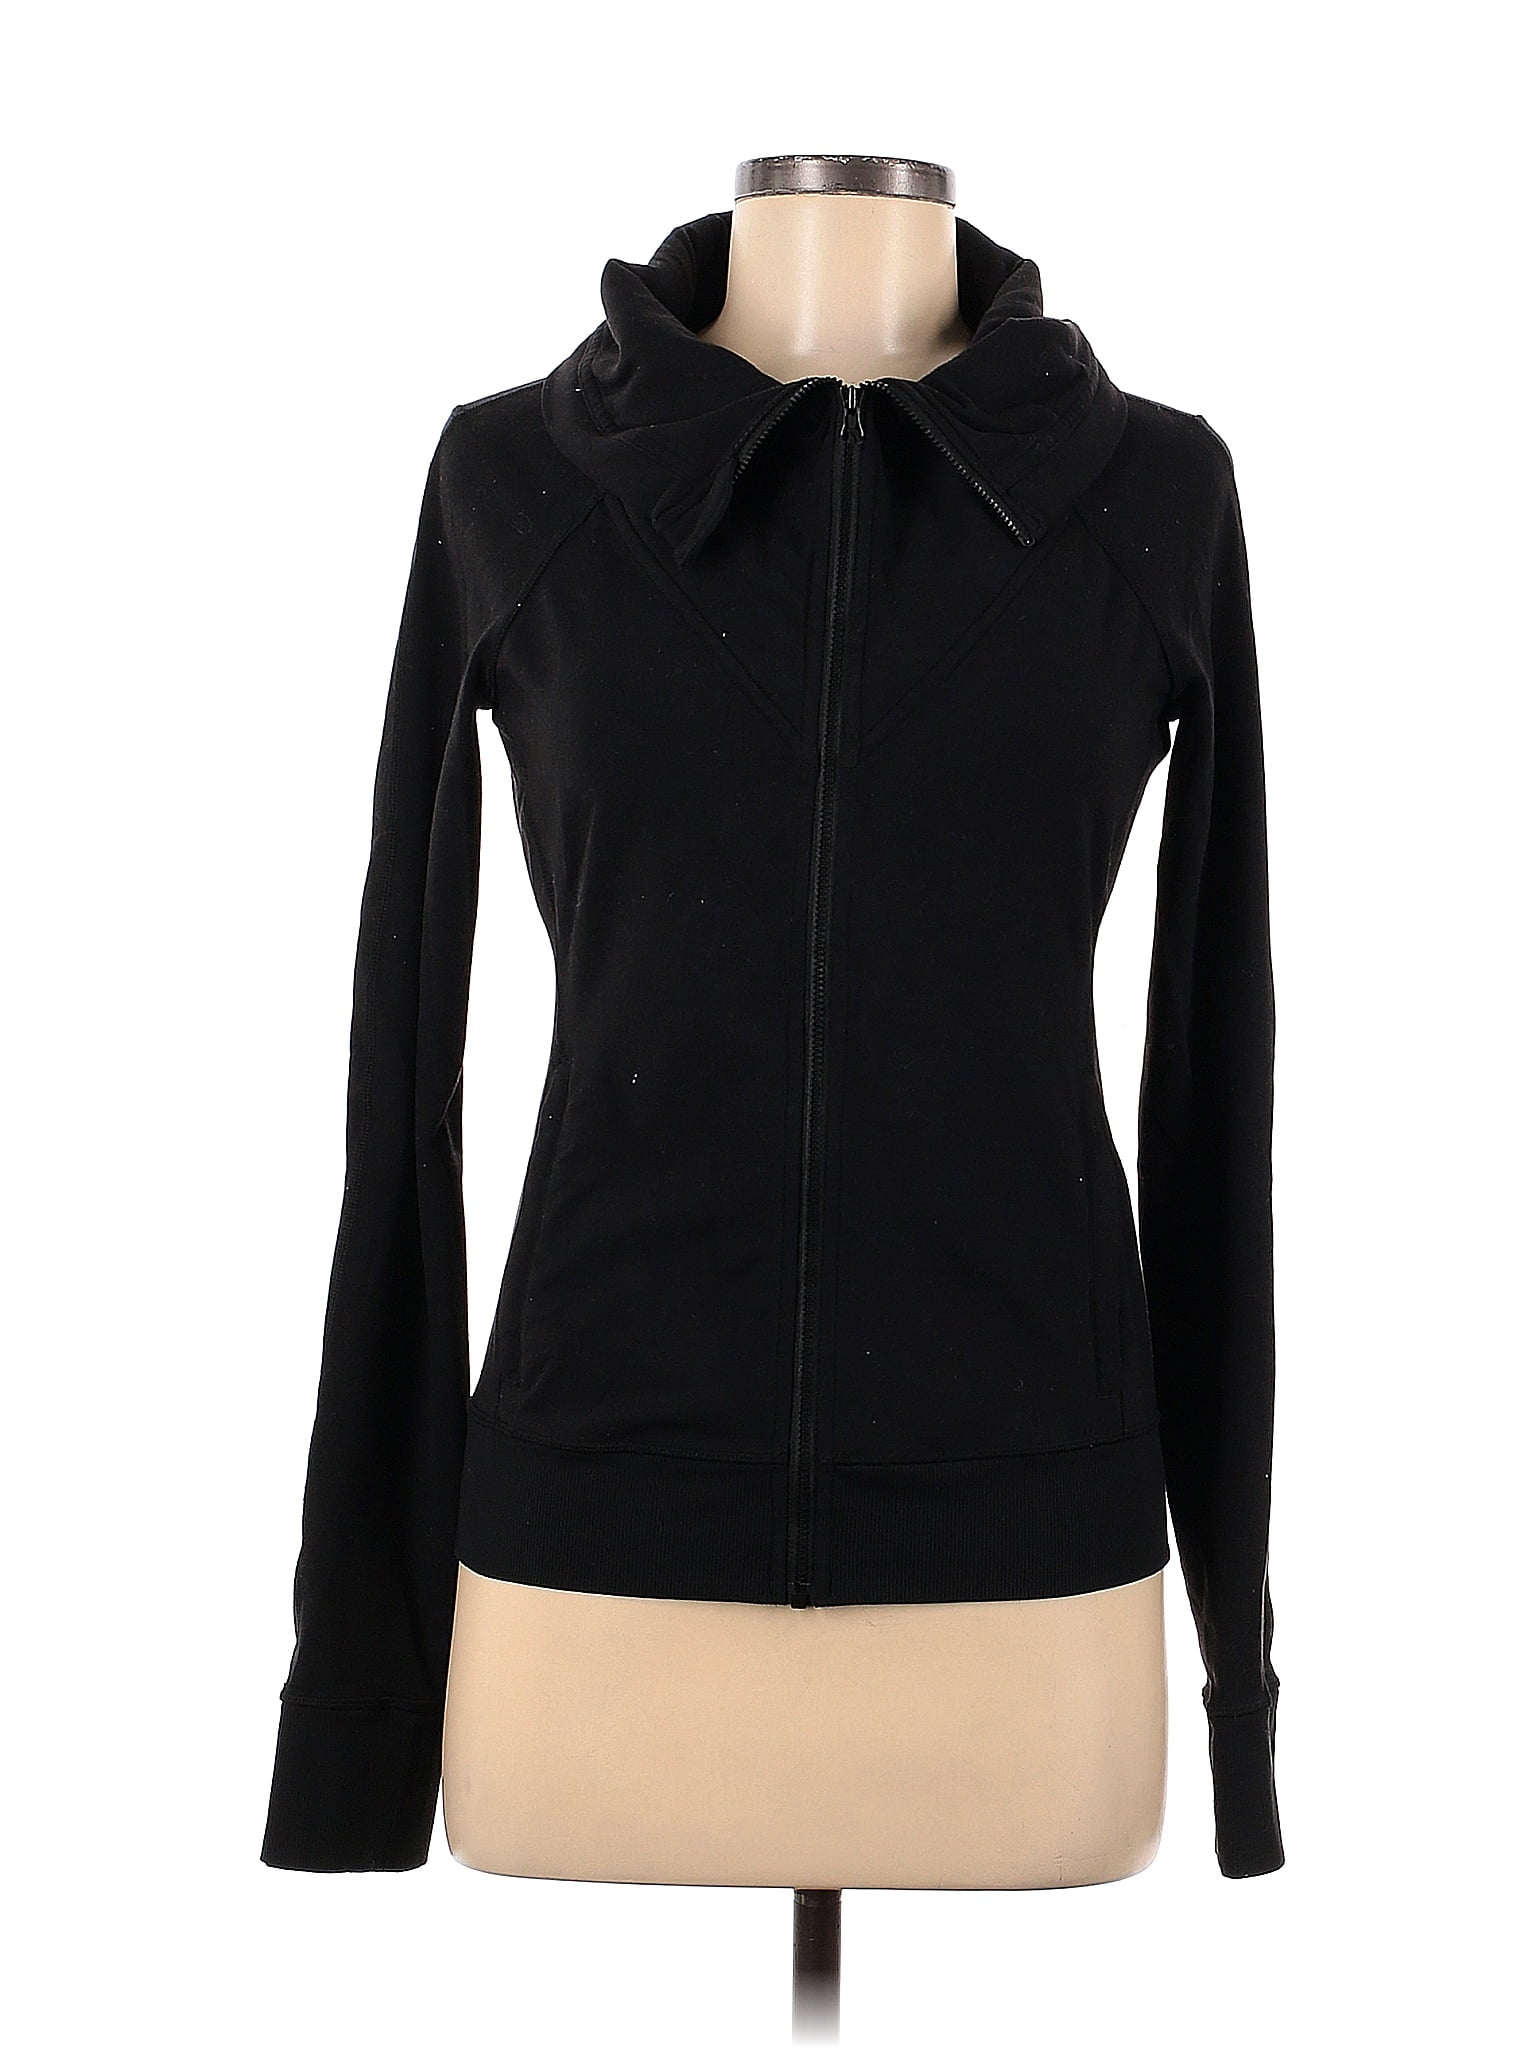 Lululemon Athletica Black Track Jacket Size 8 - 69% off | thredUP